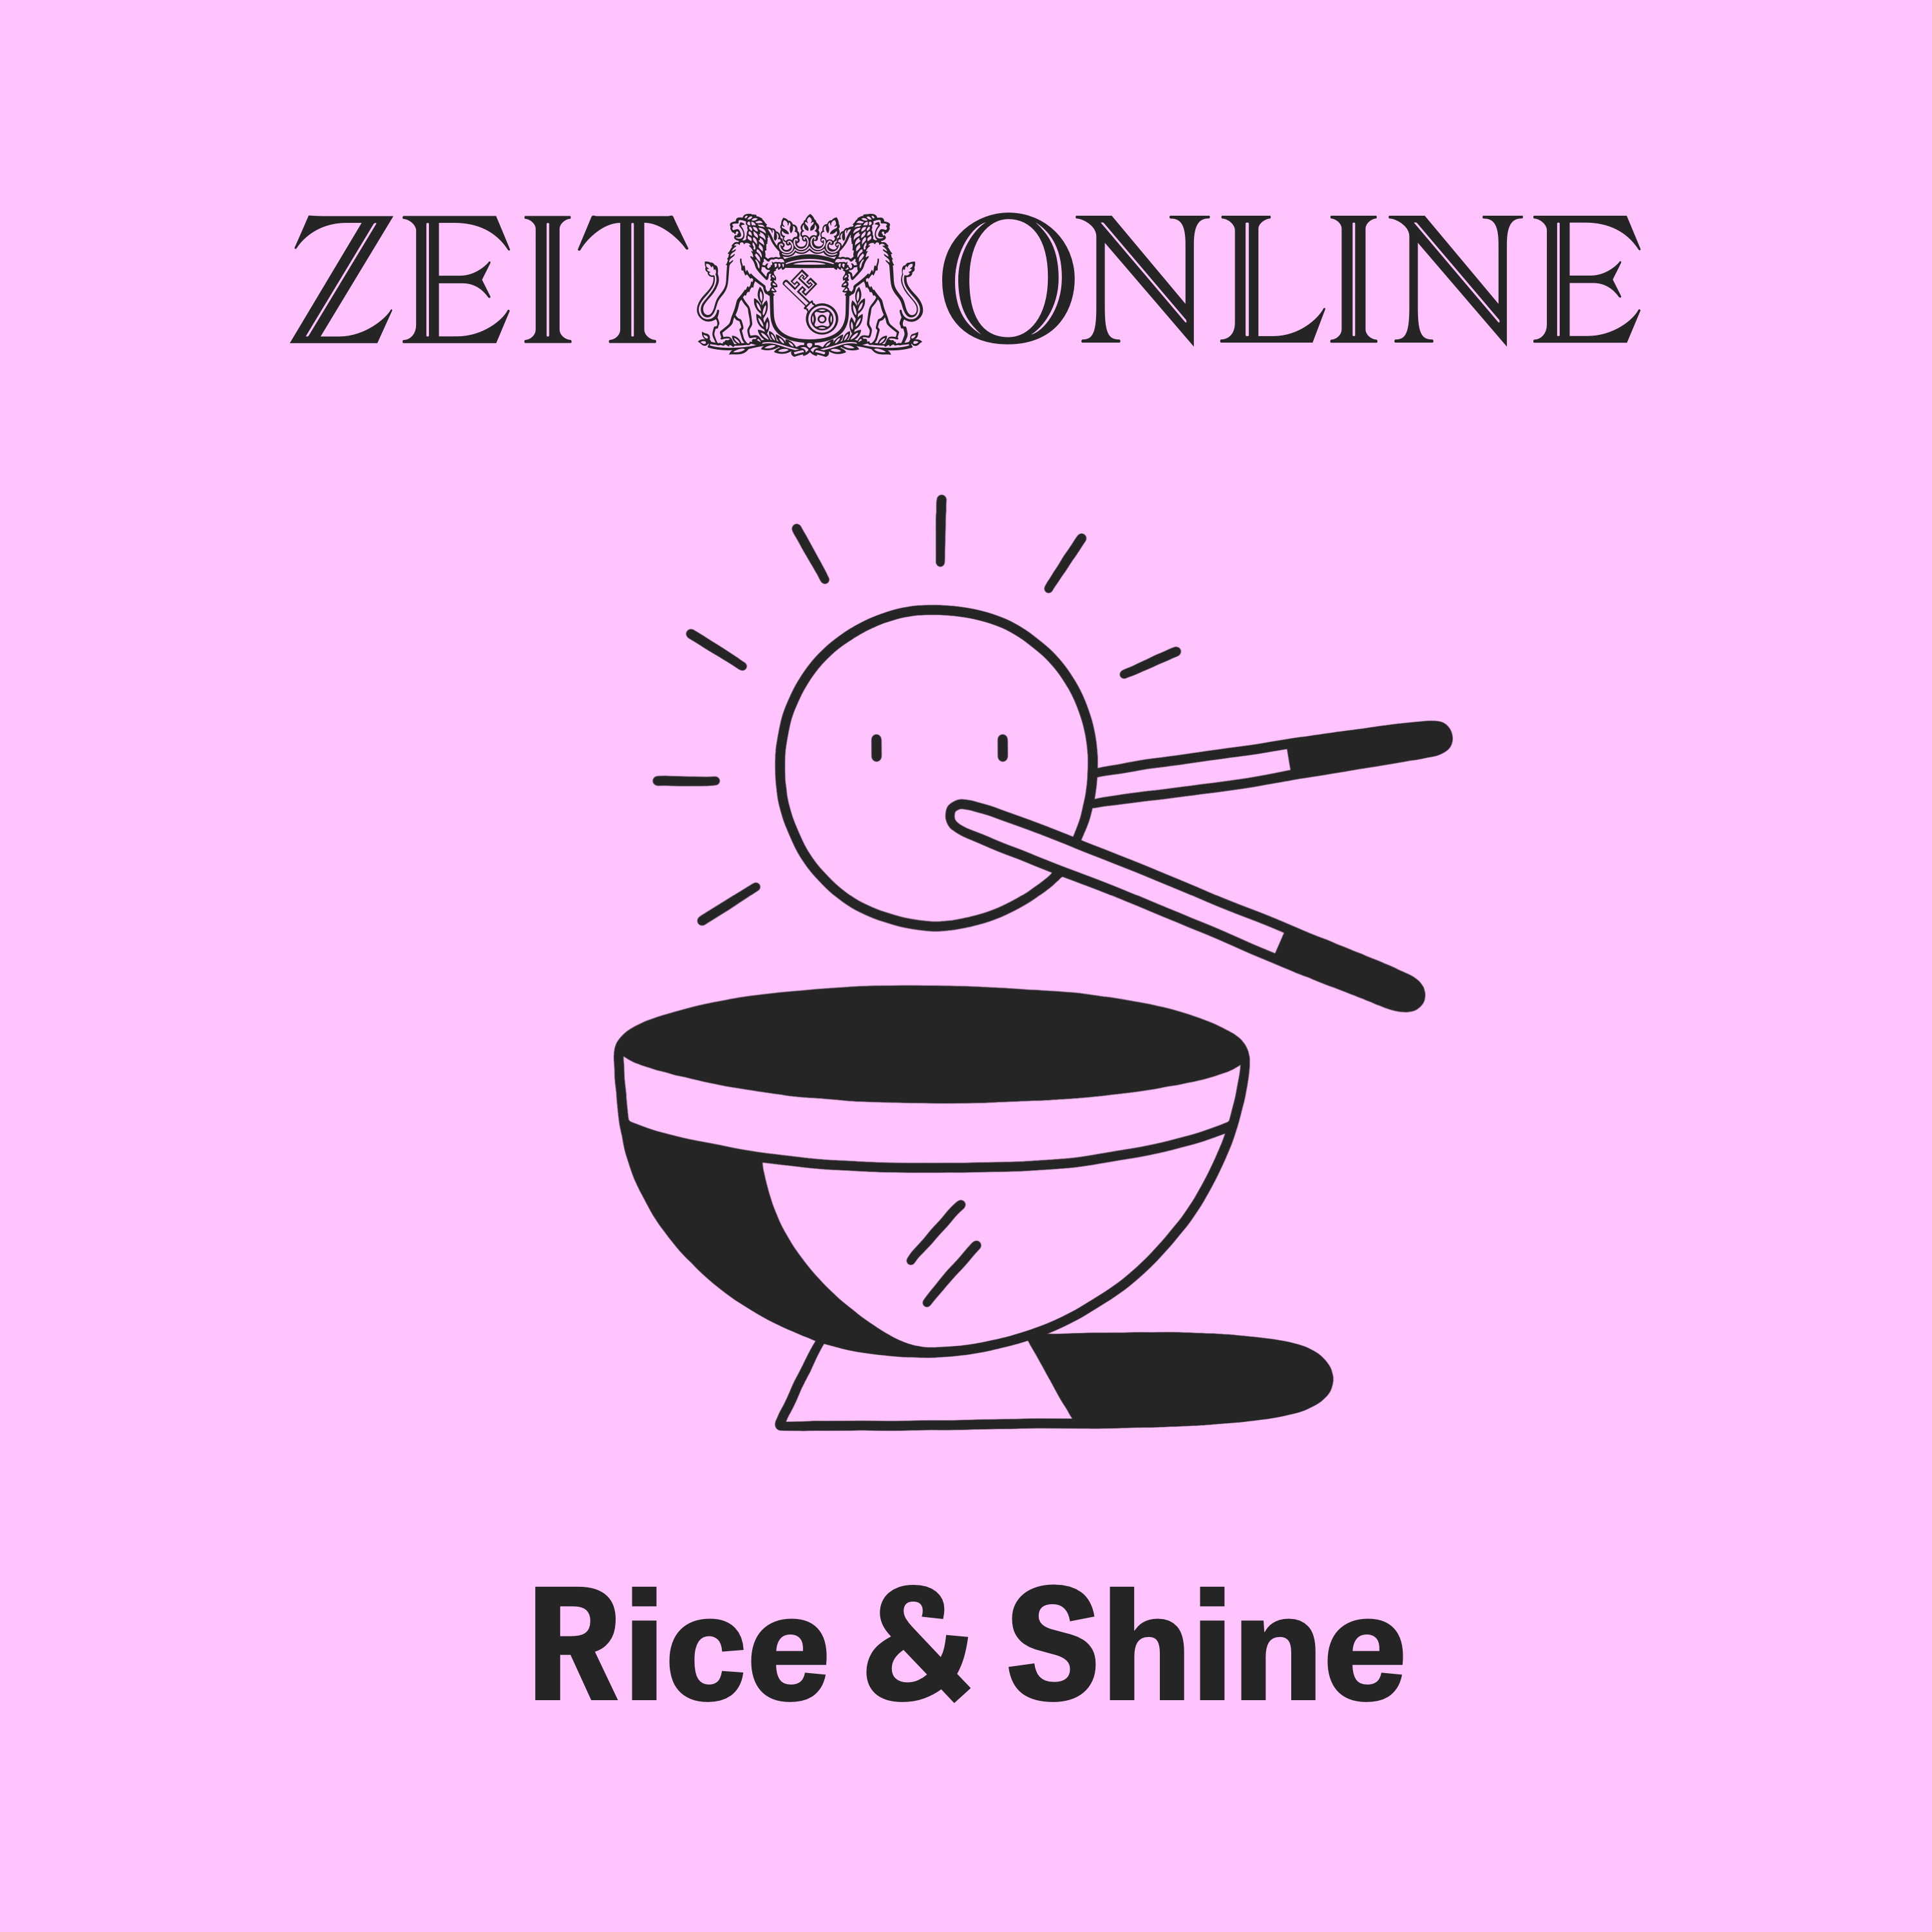 Rice and Shine